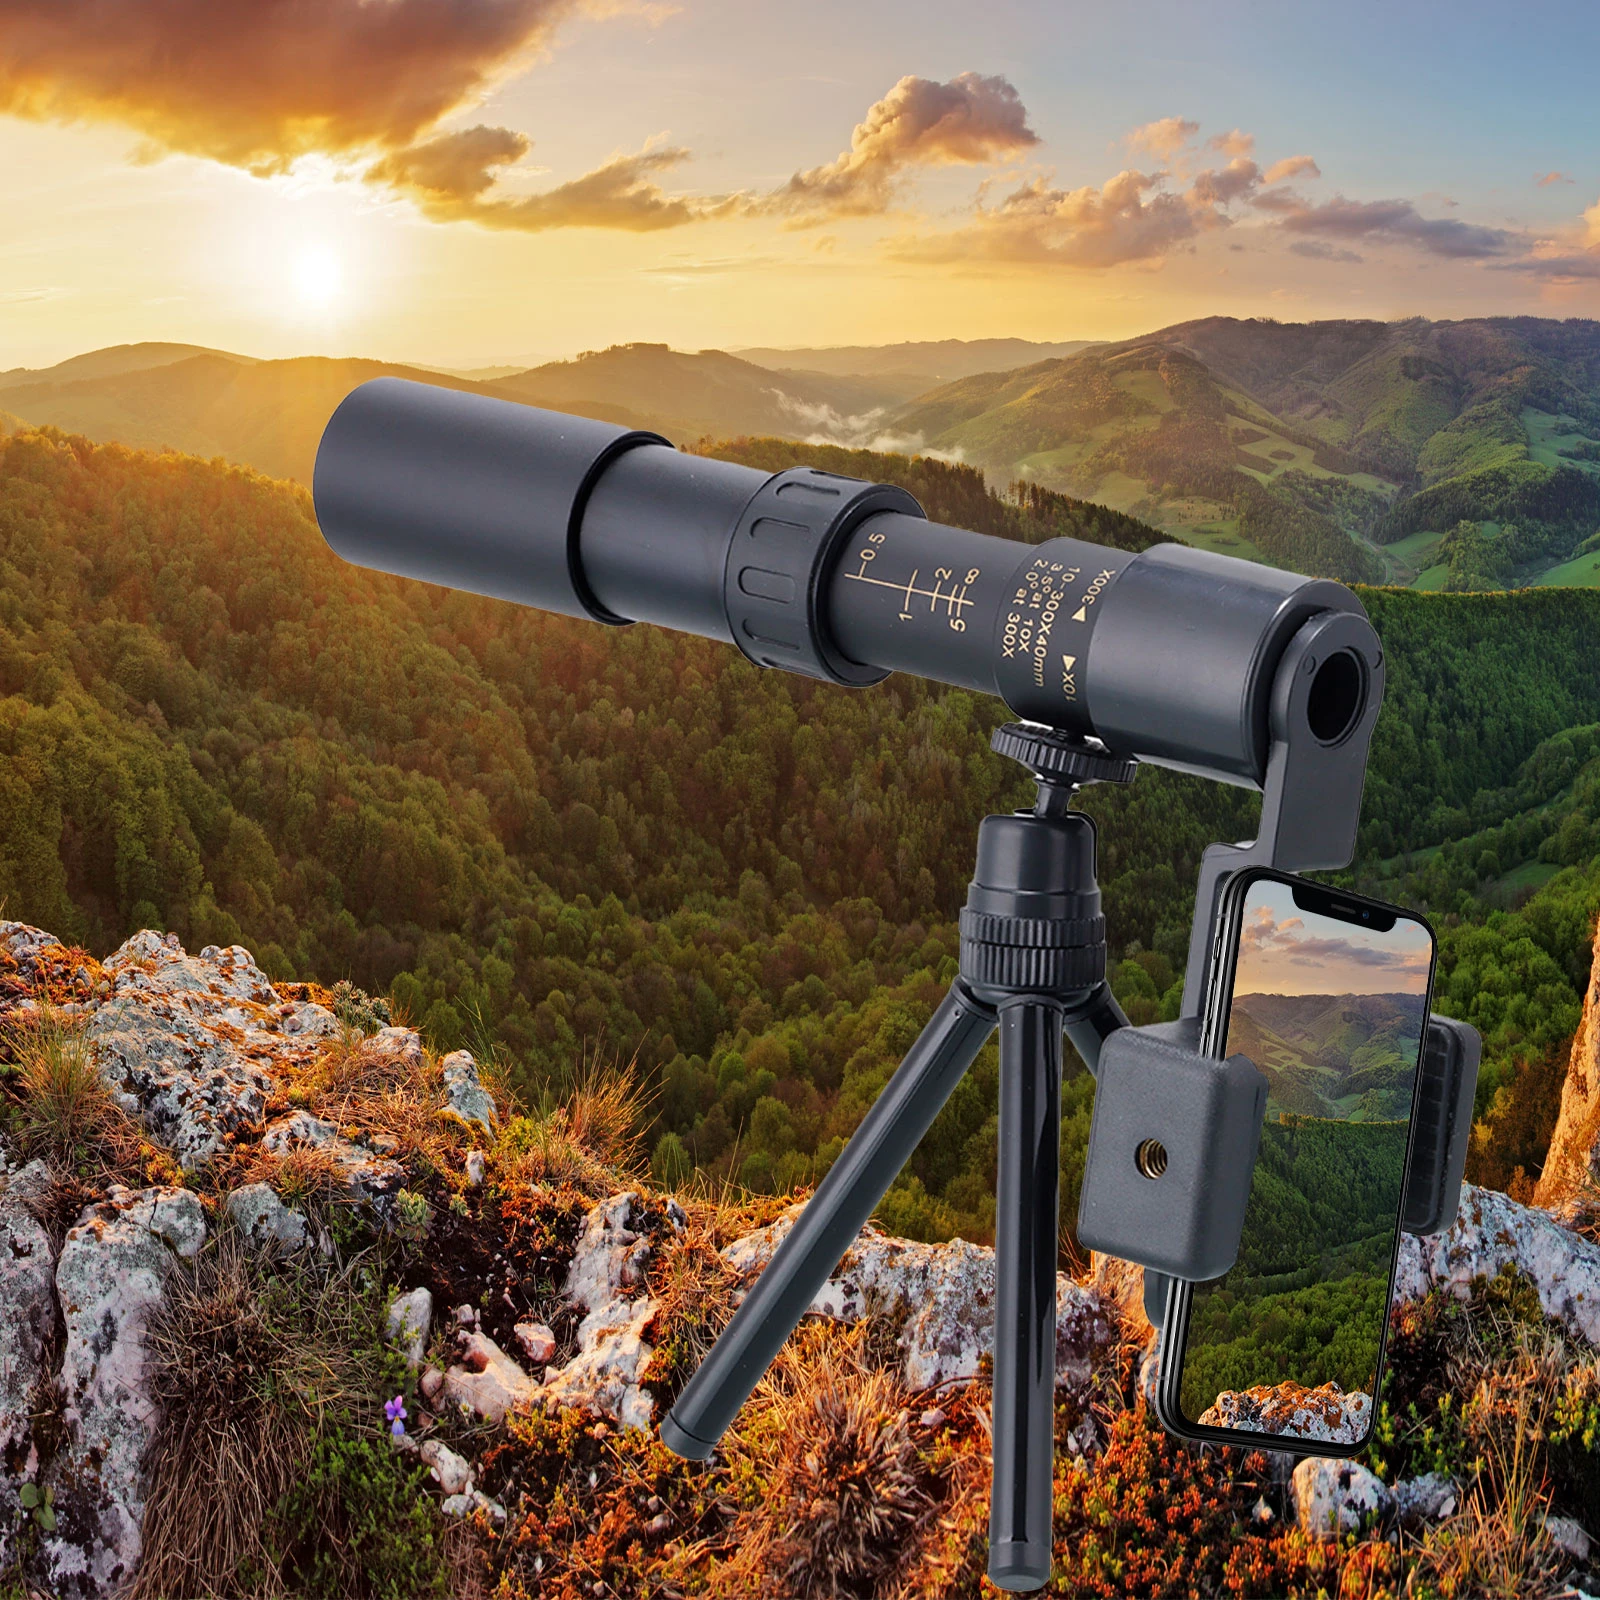 300x40 Monocular Powerful Binoculars Professional Long Range Telescope For Traveling Hunting Camping With High Definition View.jpg Q90.jpg